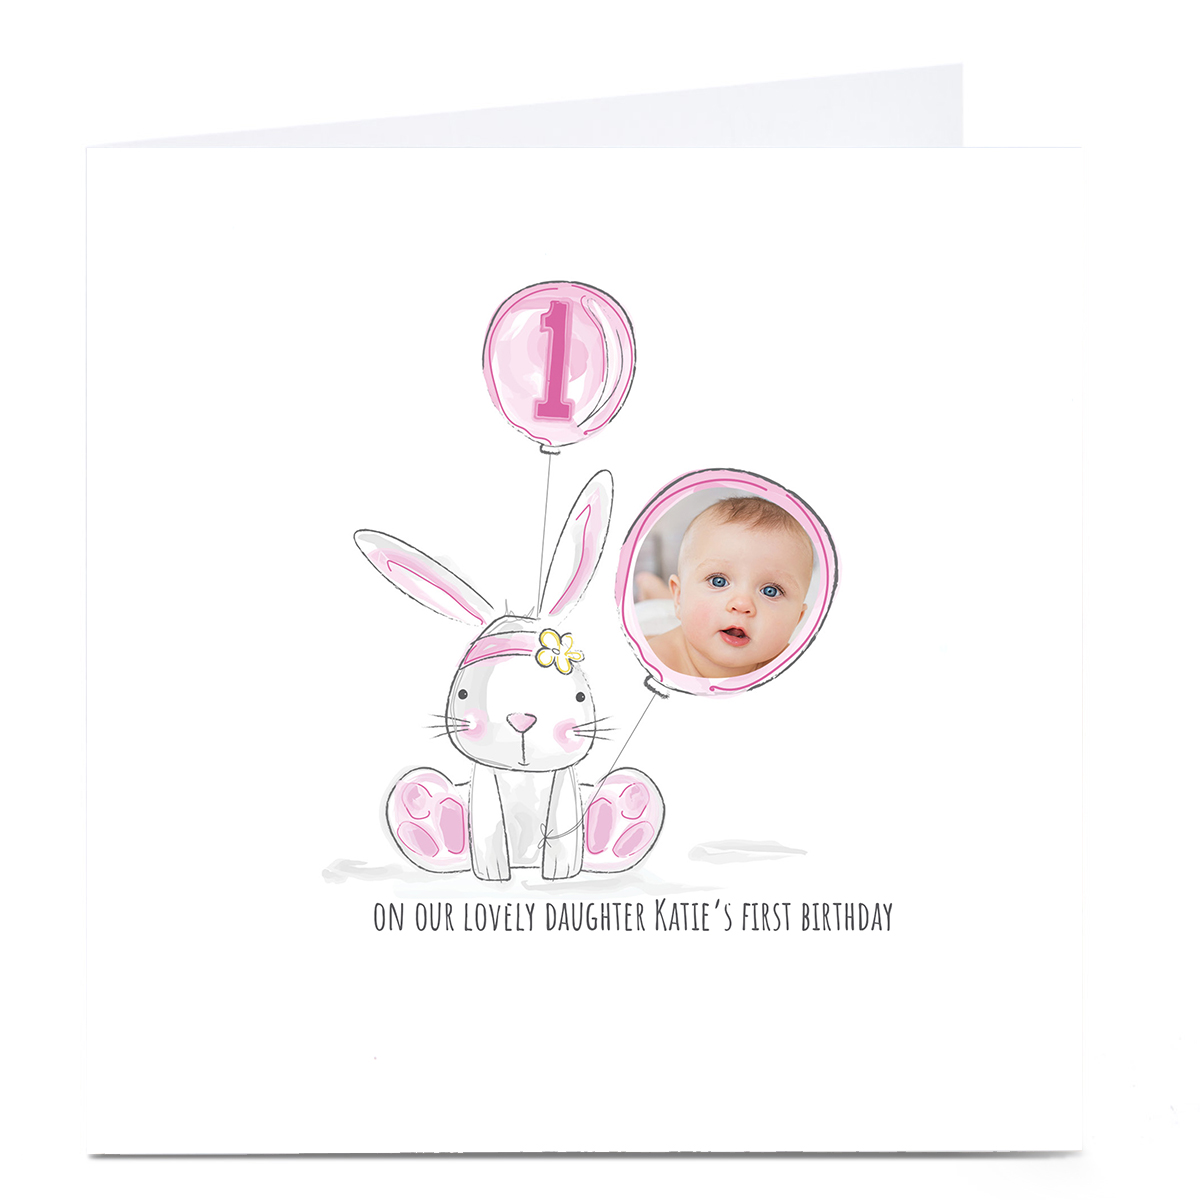 Personalised Rachel Griffin Birthday Photo Card - Pink Rabbit Balloon, 1